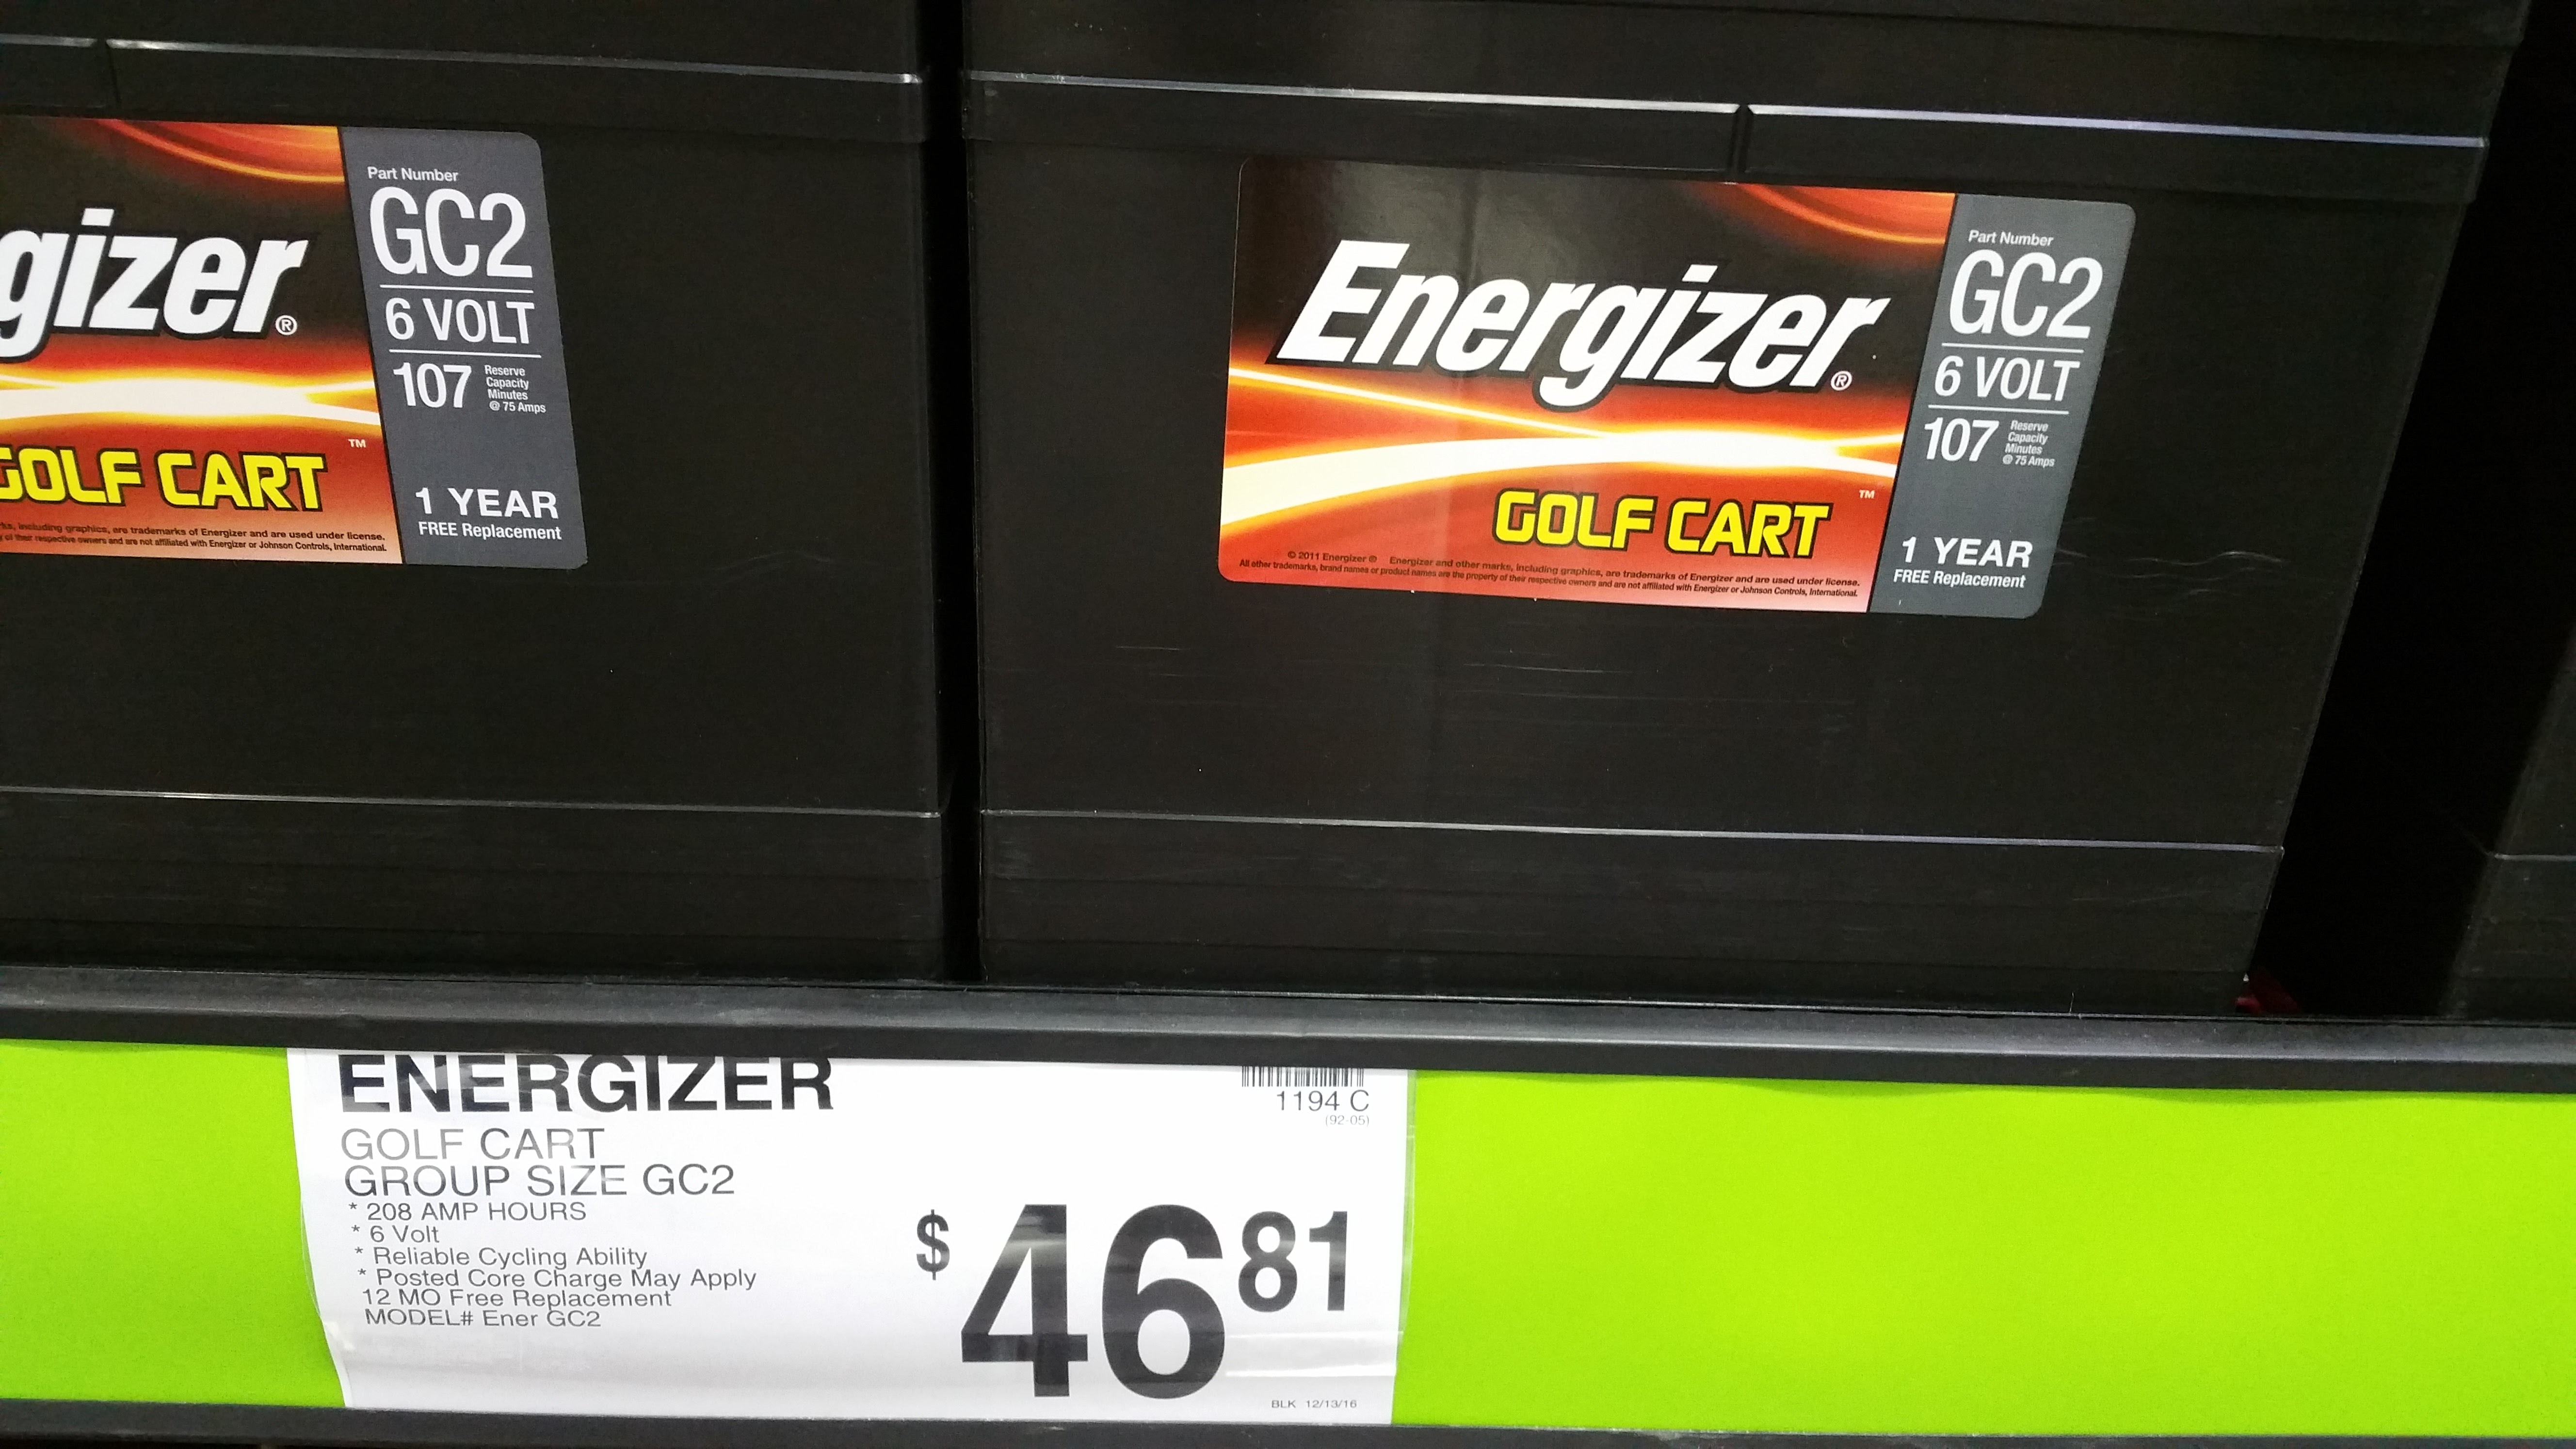 Energizer Golf Cart Batteries at Sam's Club 46.81